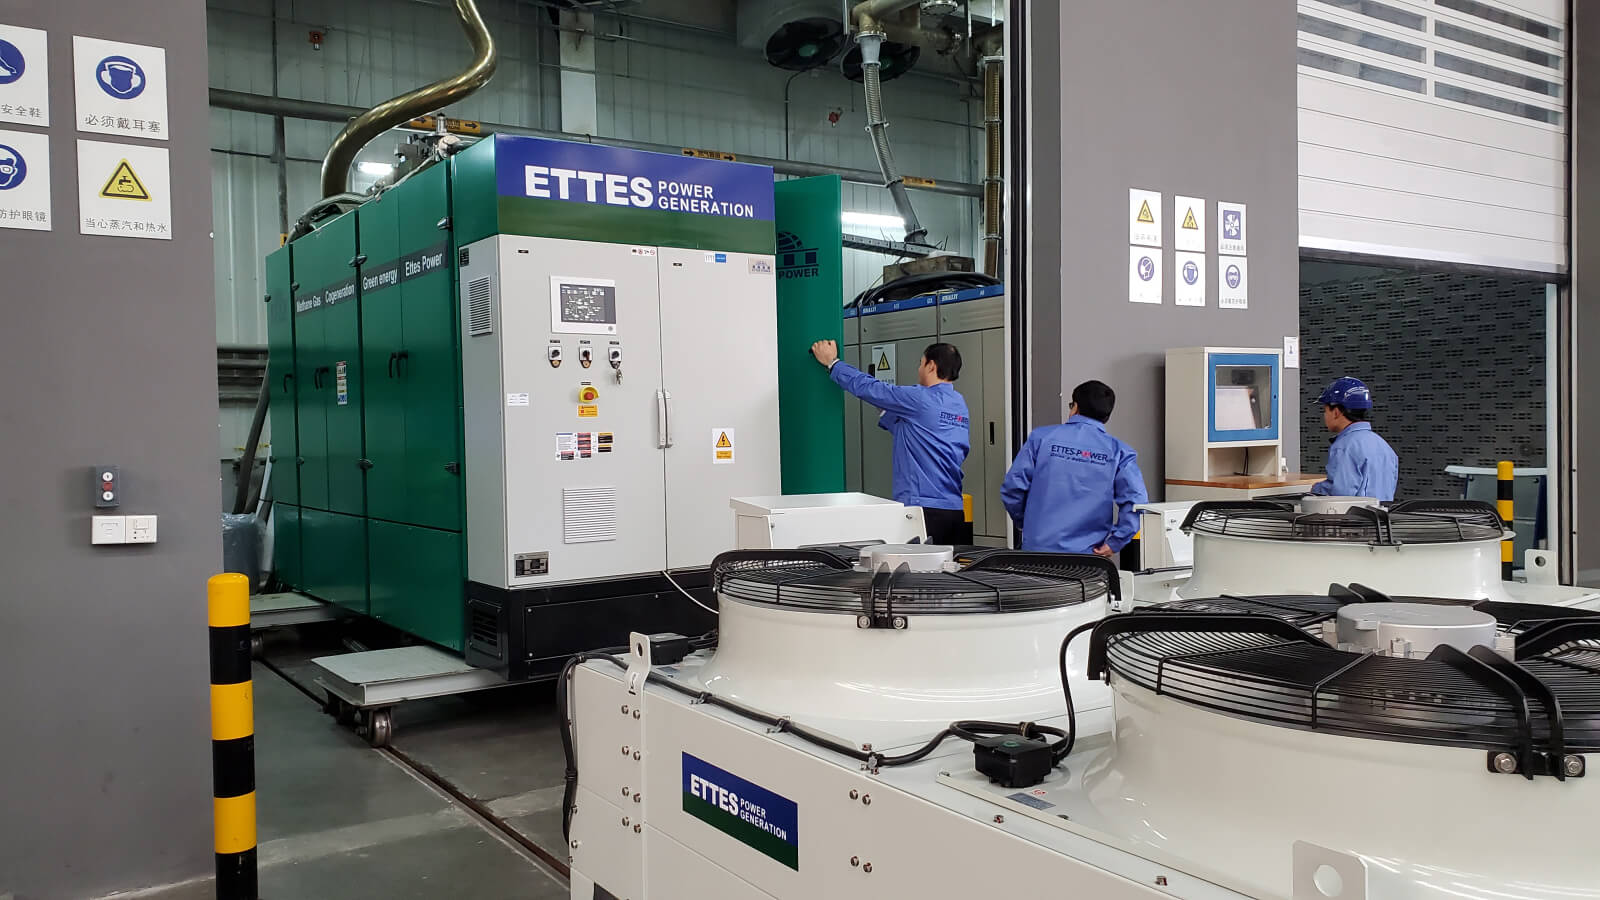 Ettes Power MAN MWM Gas Engine Generating Set CHP Cogeneration EttesPower